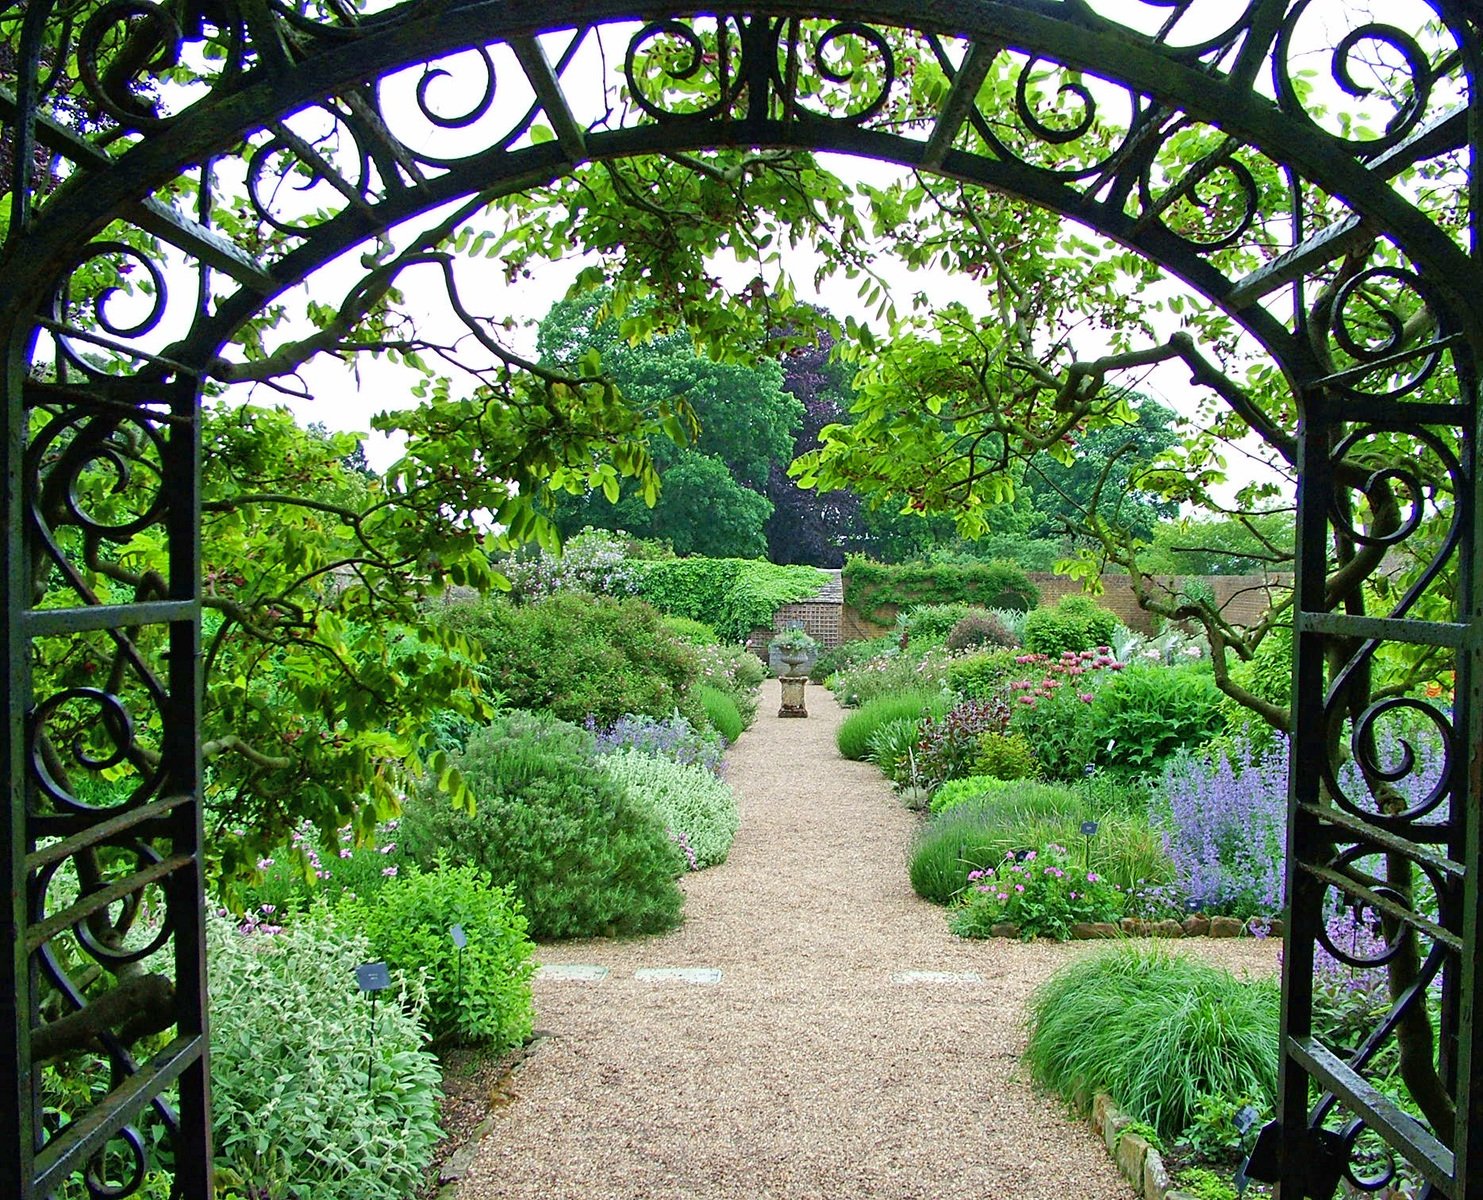 a stone path is leading through a garden